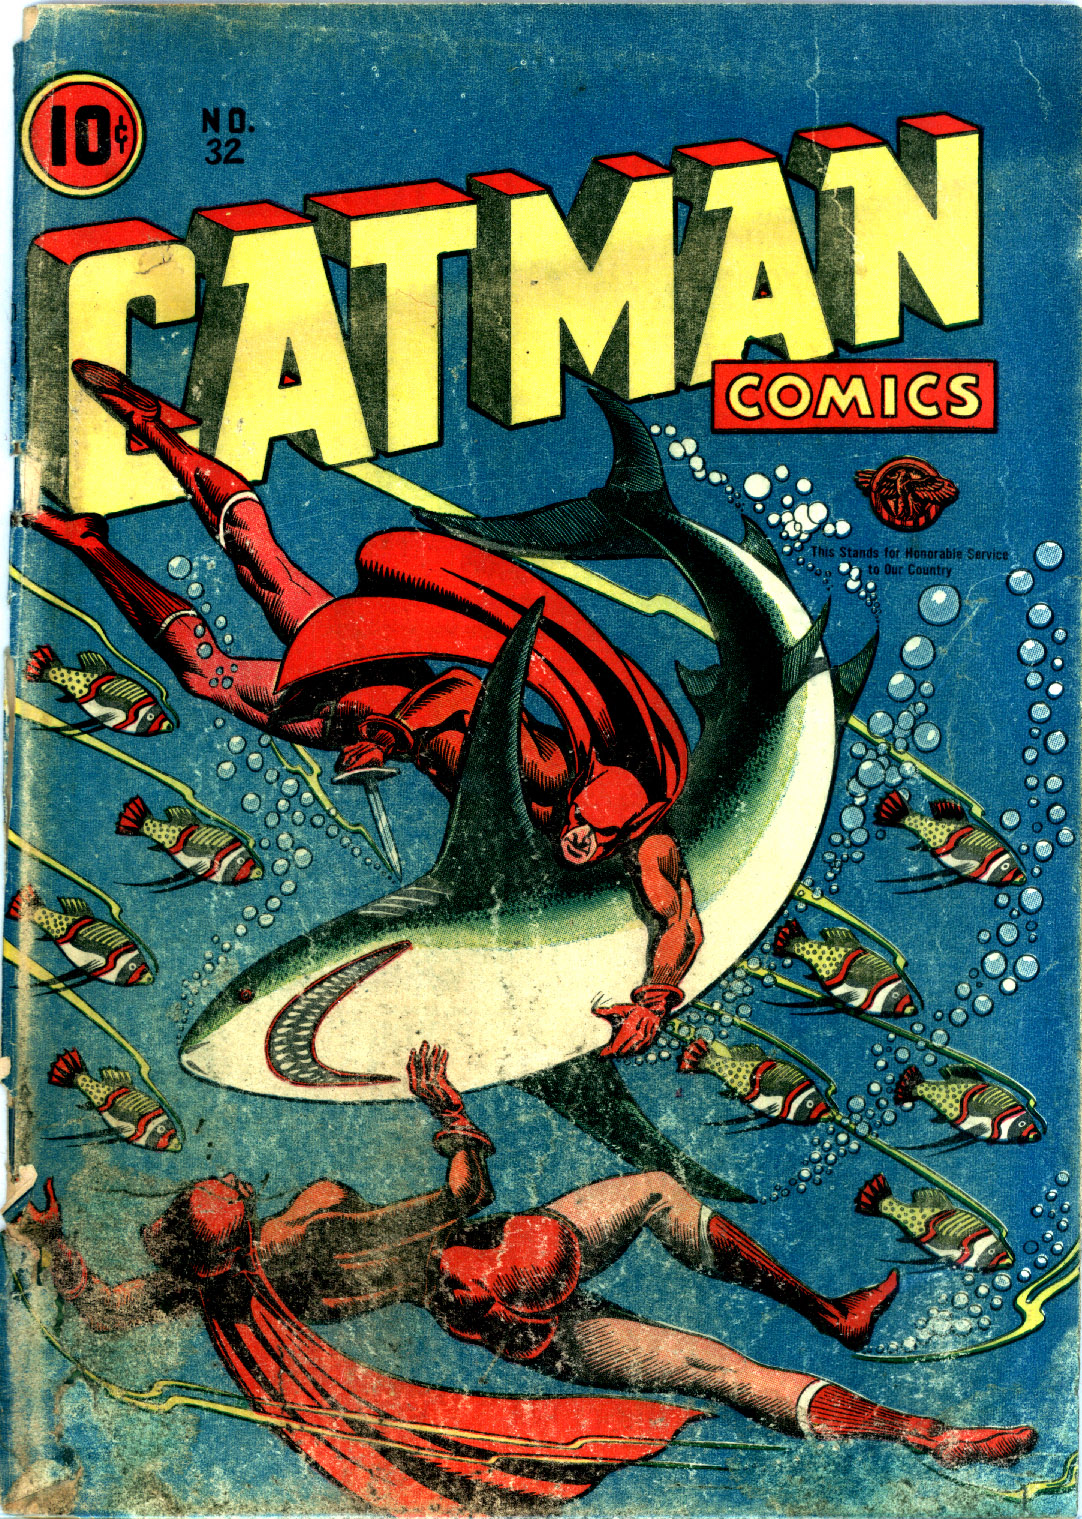 Cat-Man Comics 32 Page 1